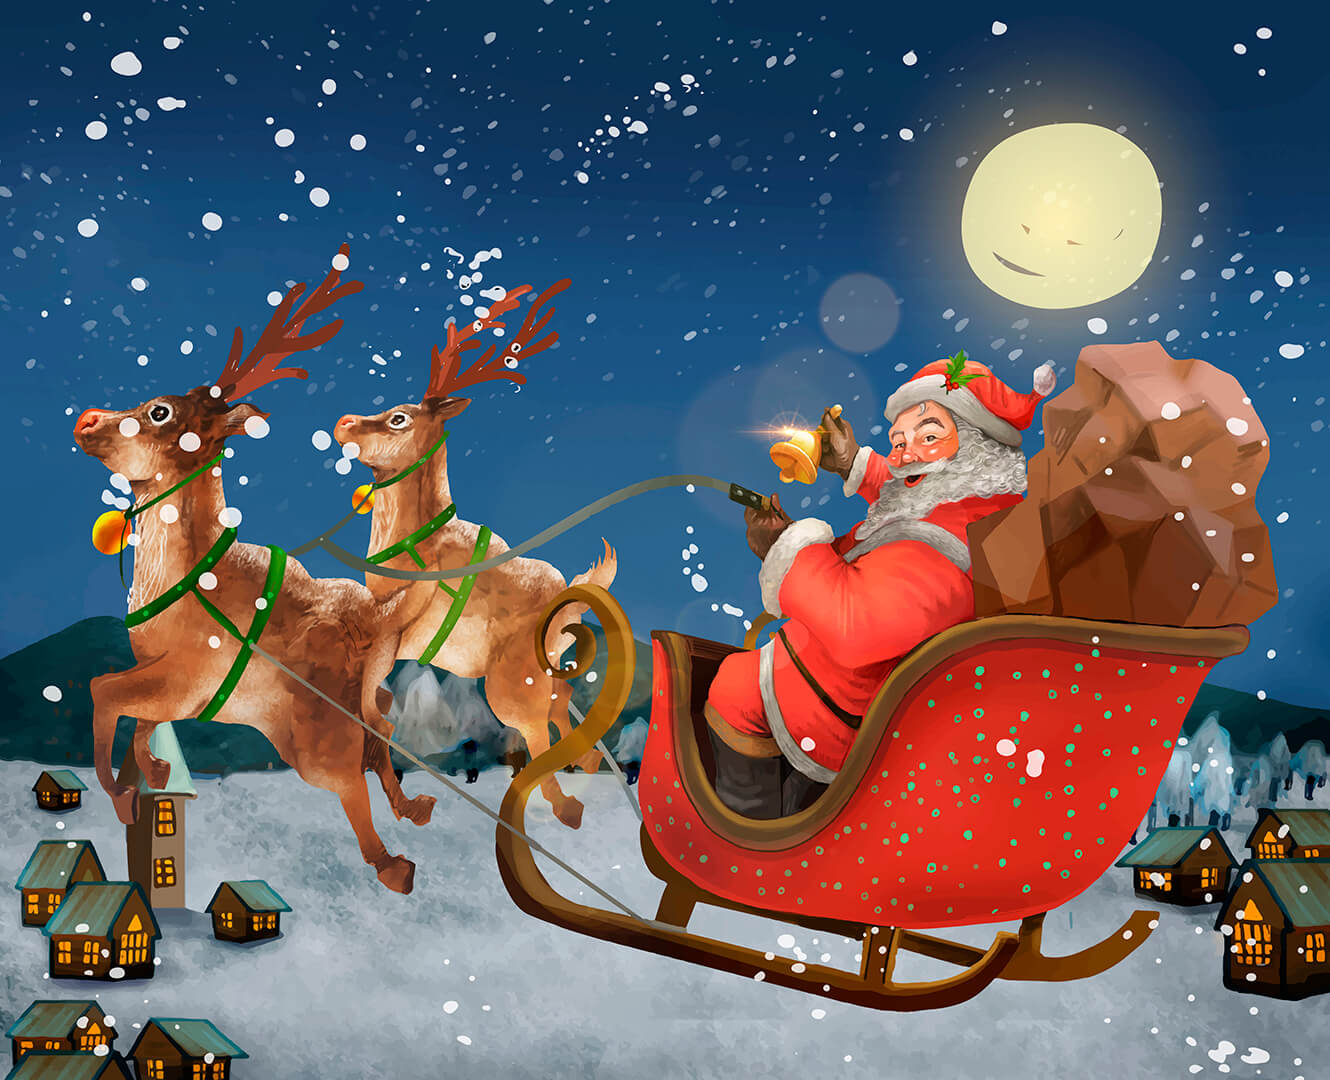 Santa riding in his sleigh pulled by reindeer